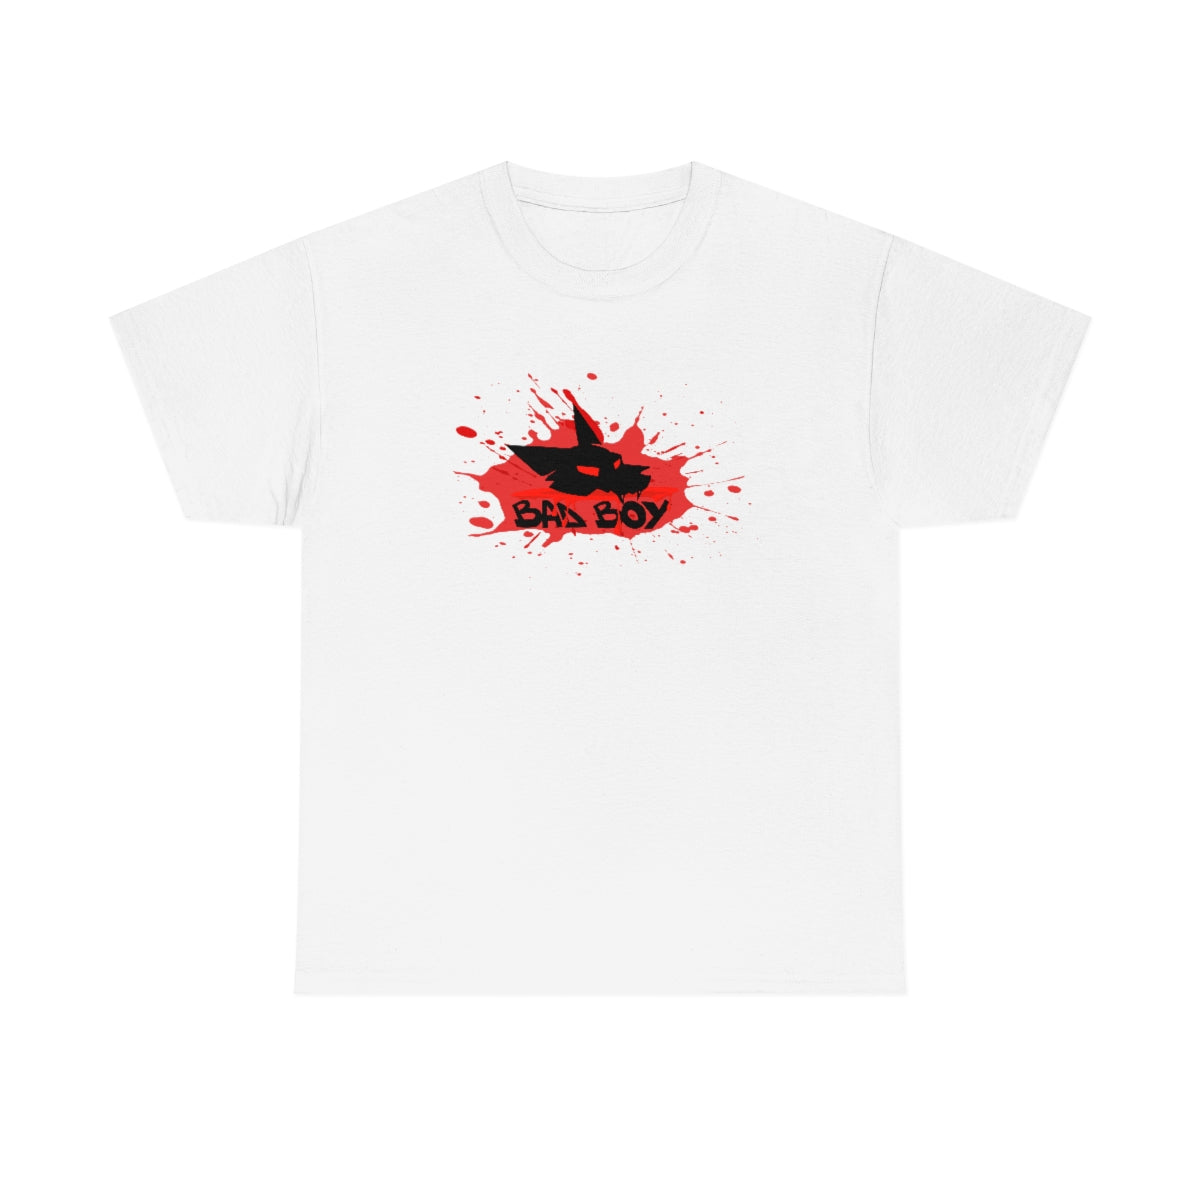 Bloodlust Bad Boy - T-Shirt T-Shirt Zenonclaw White S 